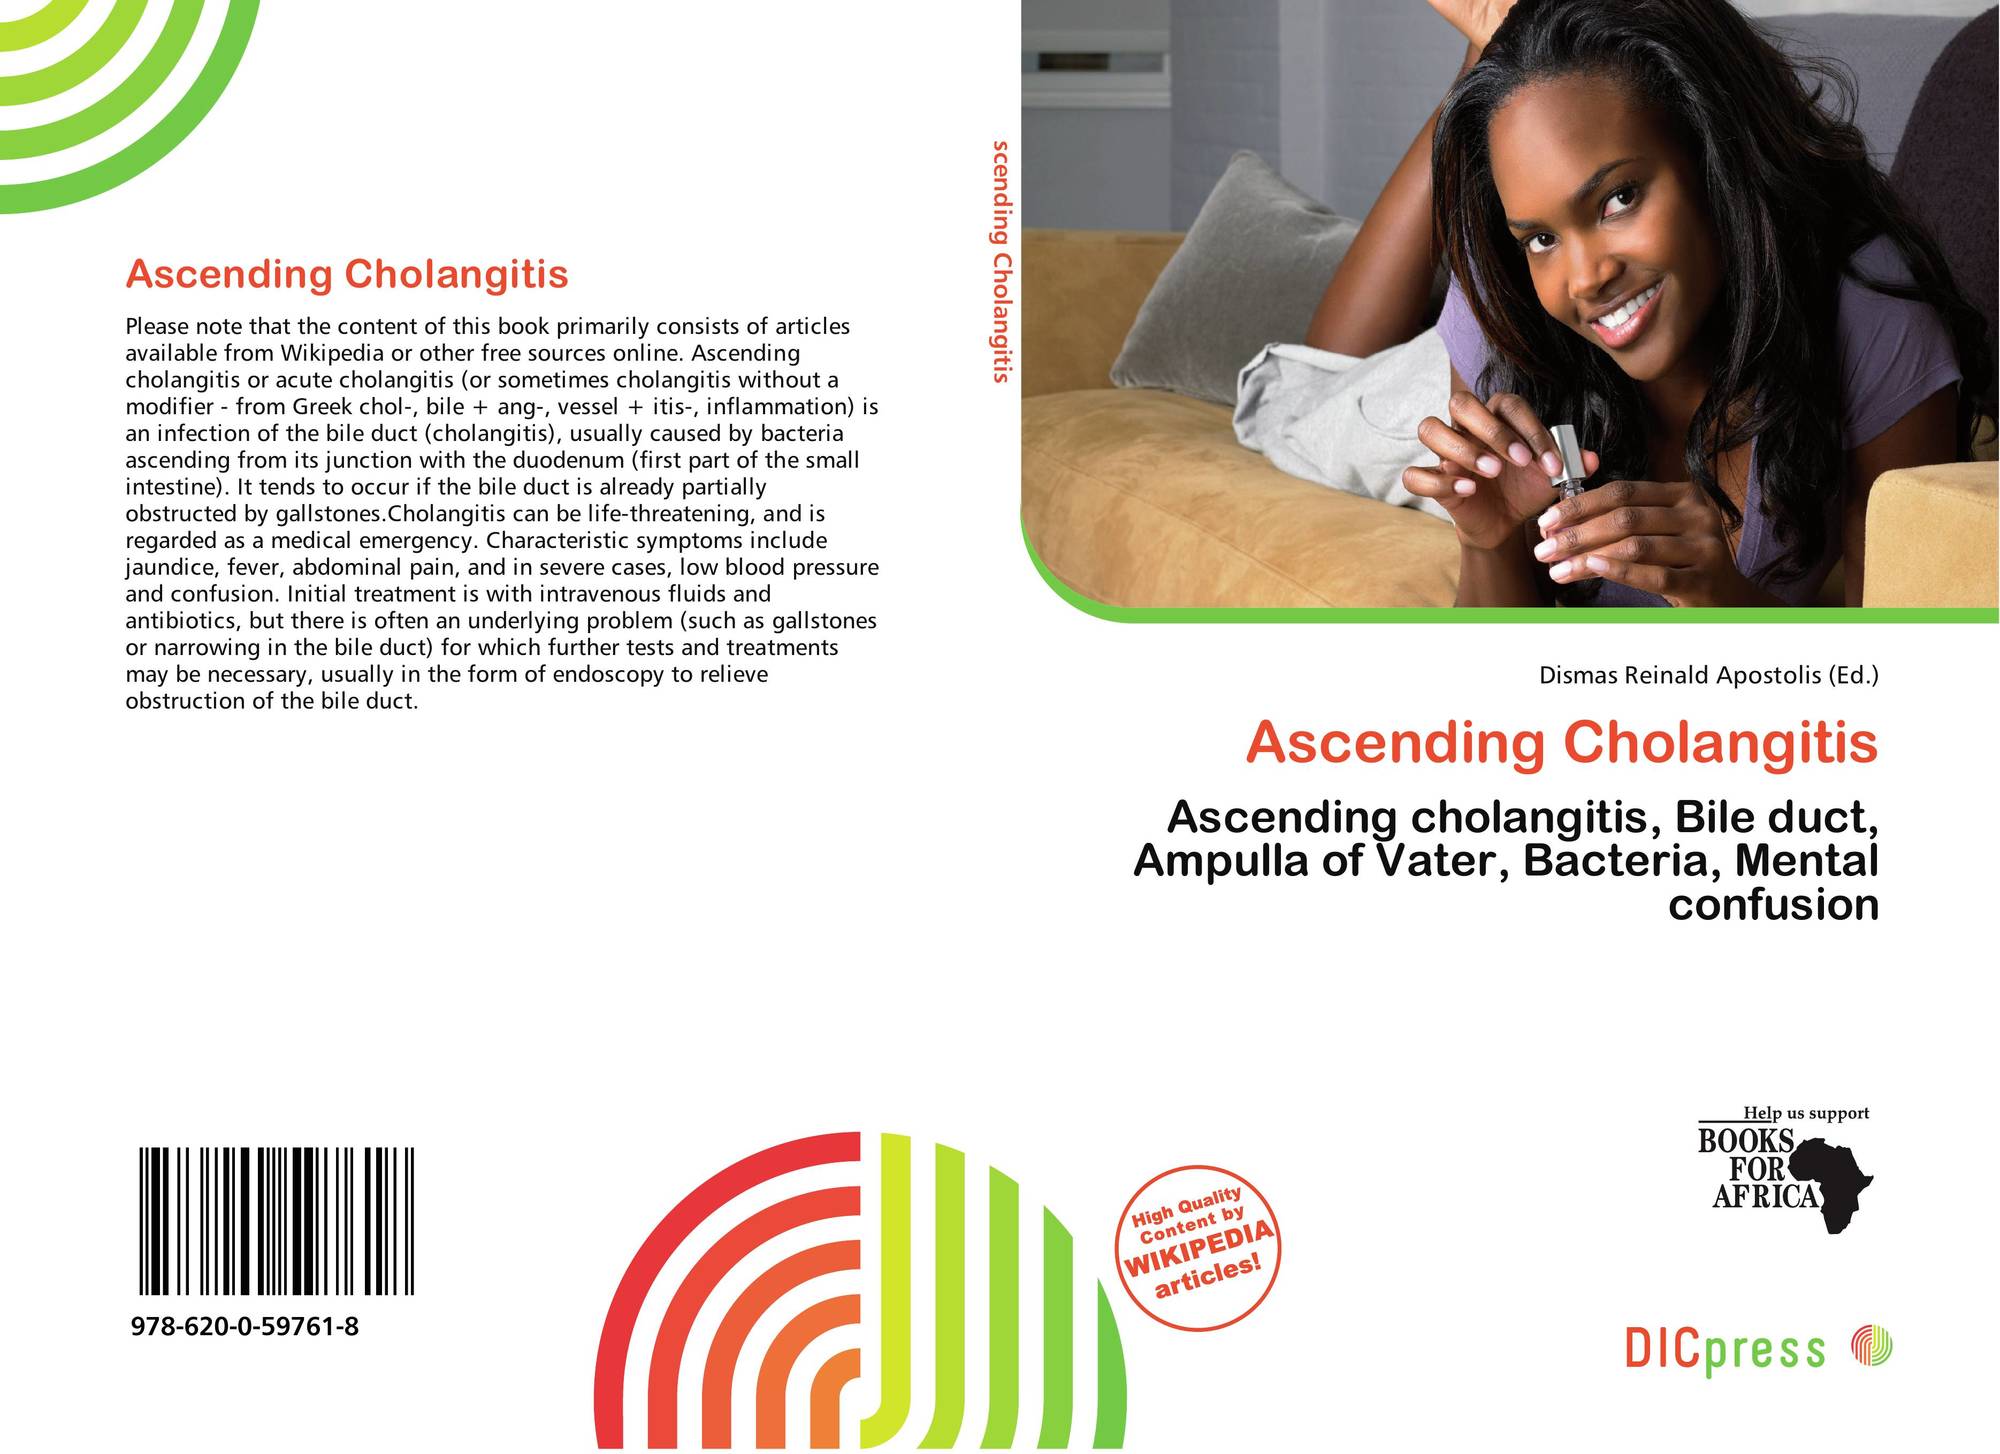 Ascending cholangitis